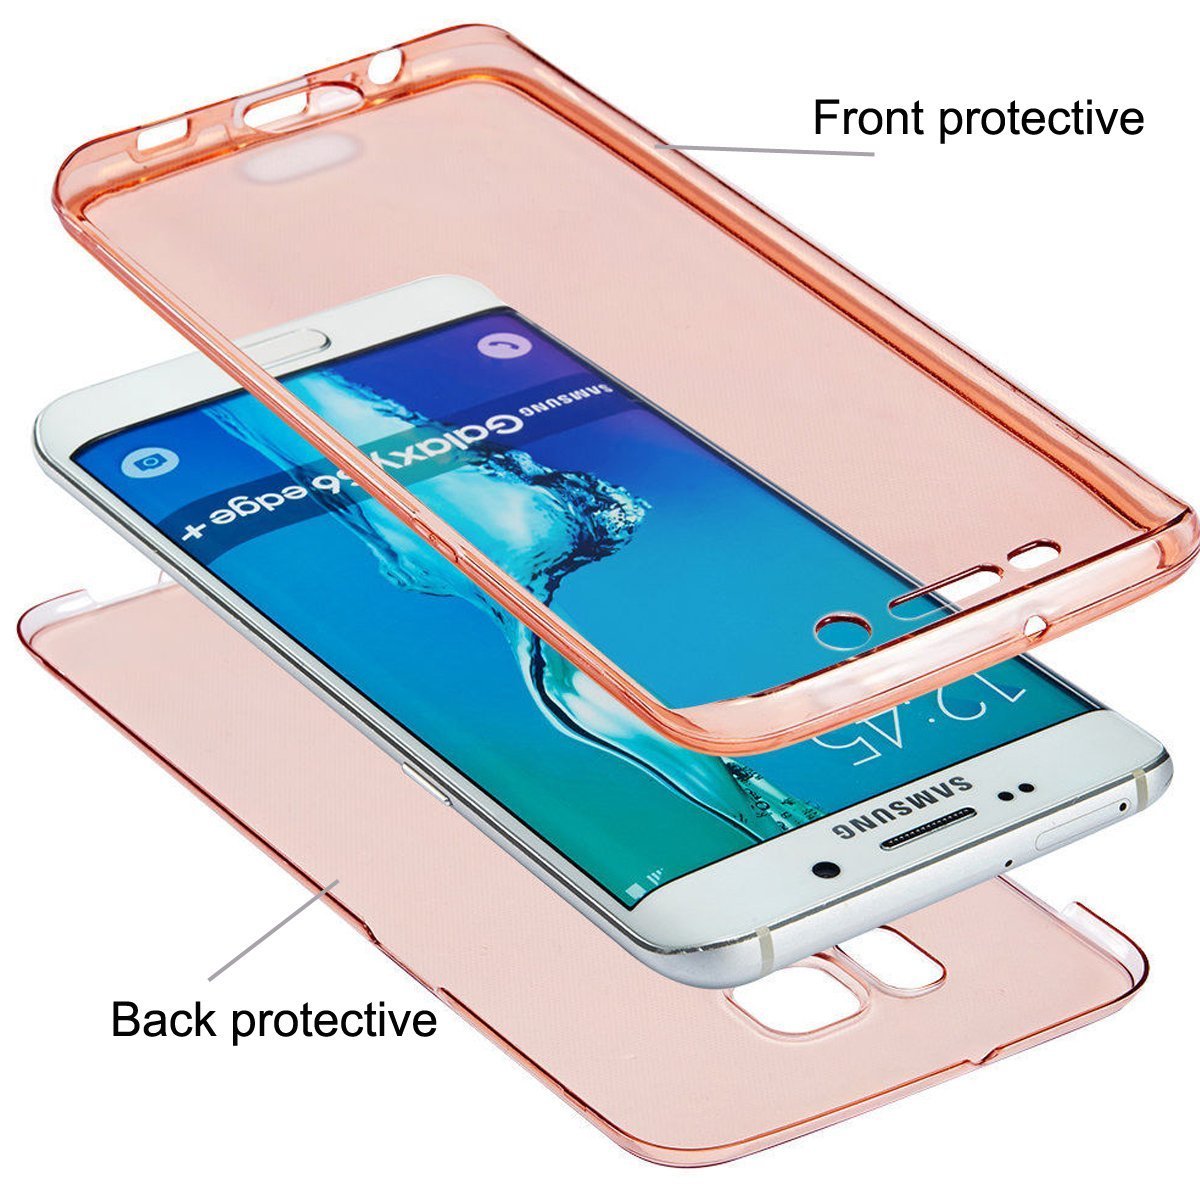 360ordm-Full-Body-Clear-Touch-Screen-Case-For-Samsung-Galaxy-A3A5A7-EU-Version-2017-1227622